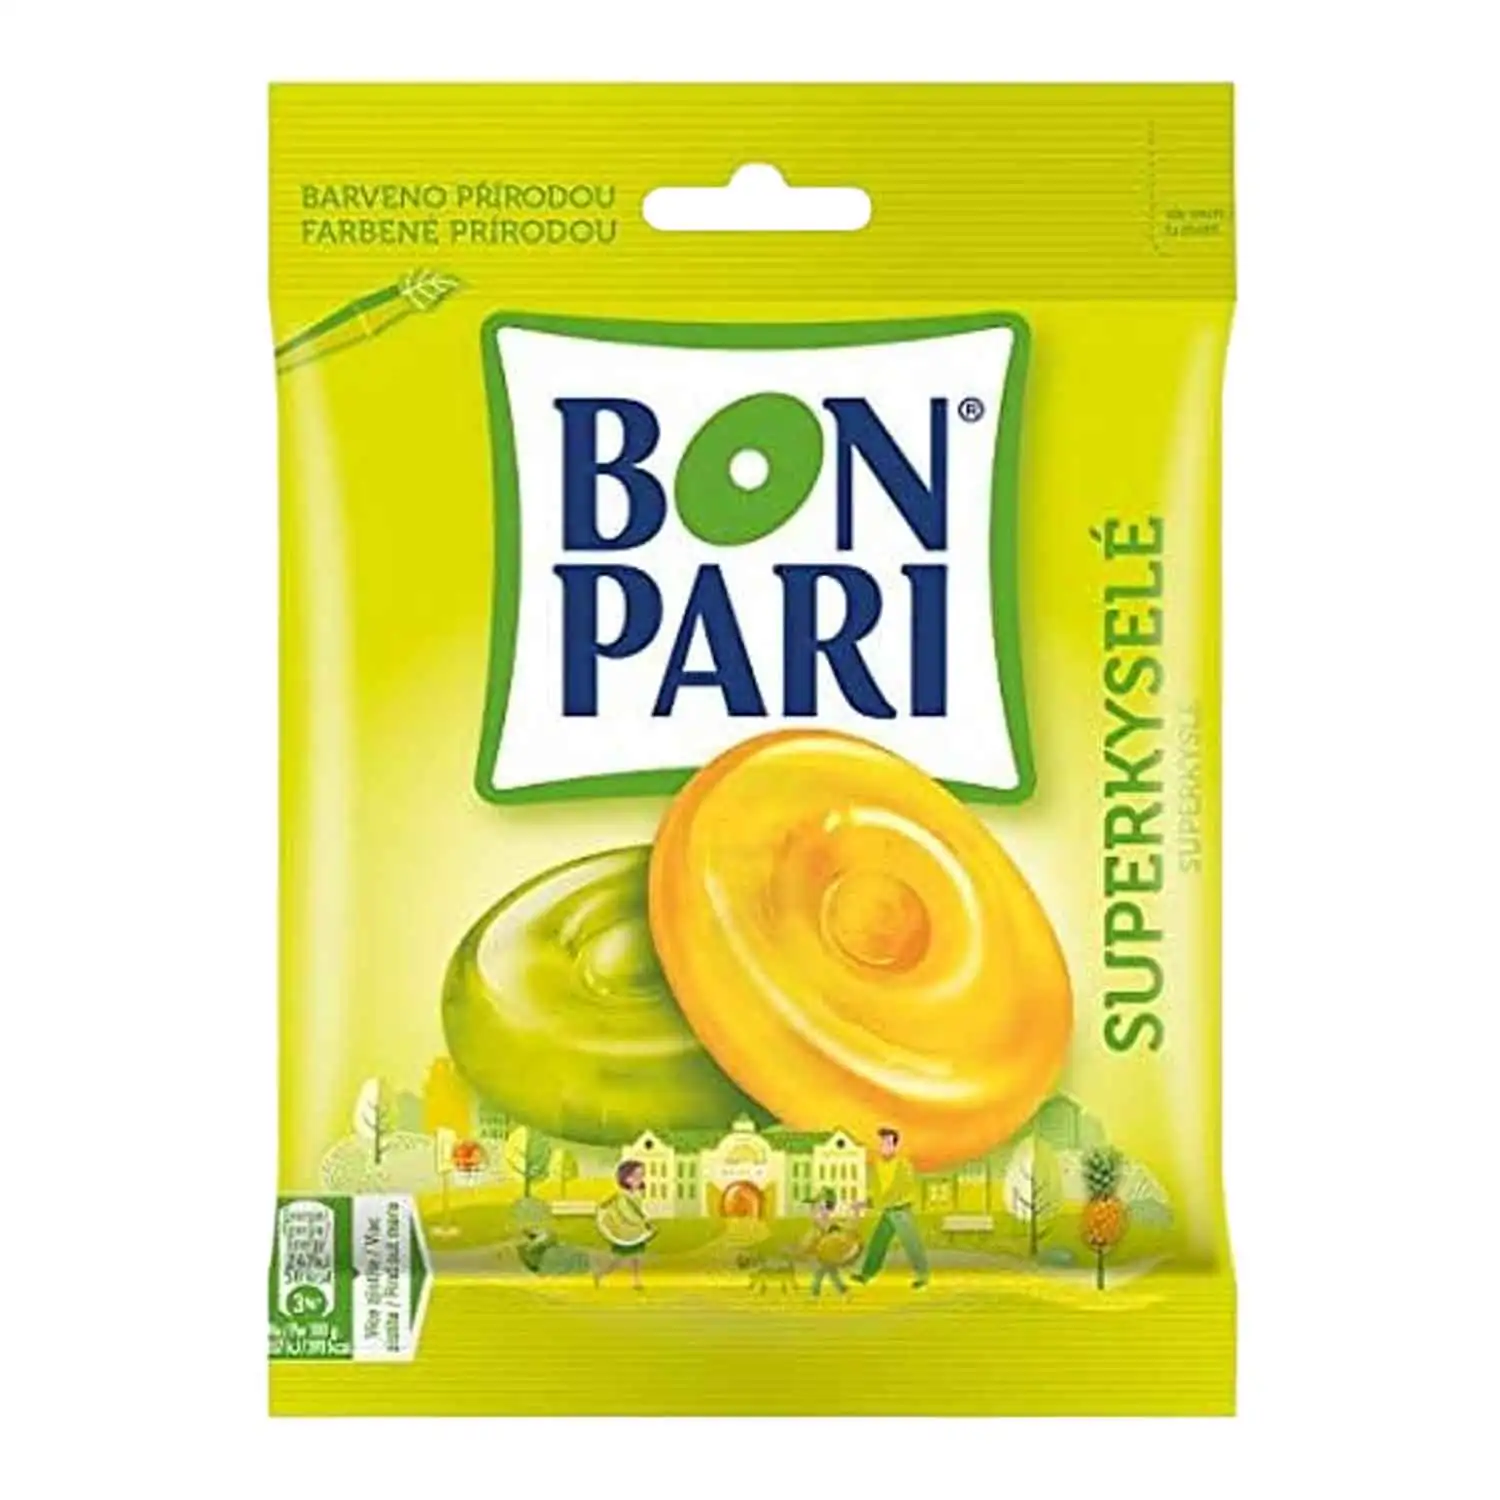 Bon Pari super sour 90g - Buy at Real Tobacco